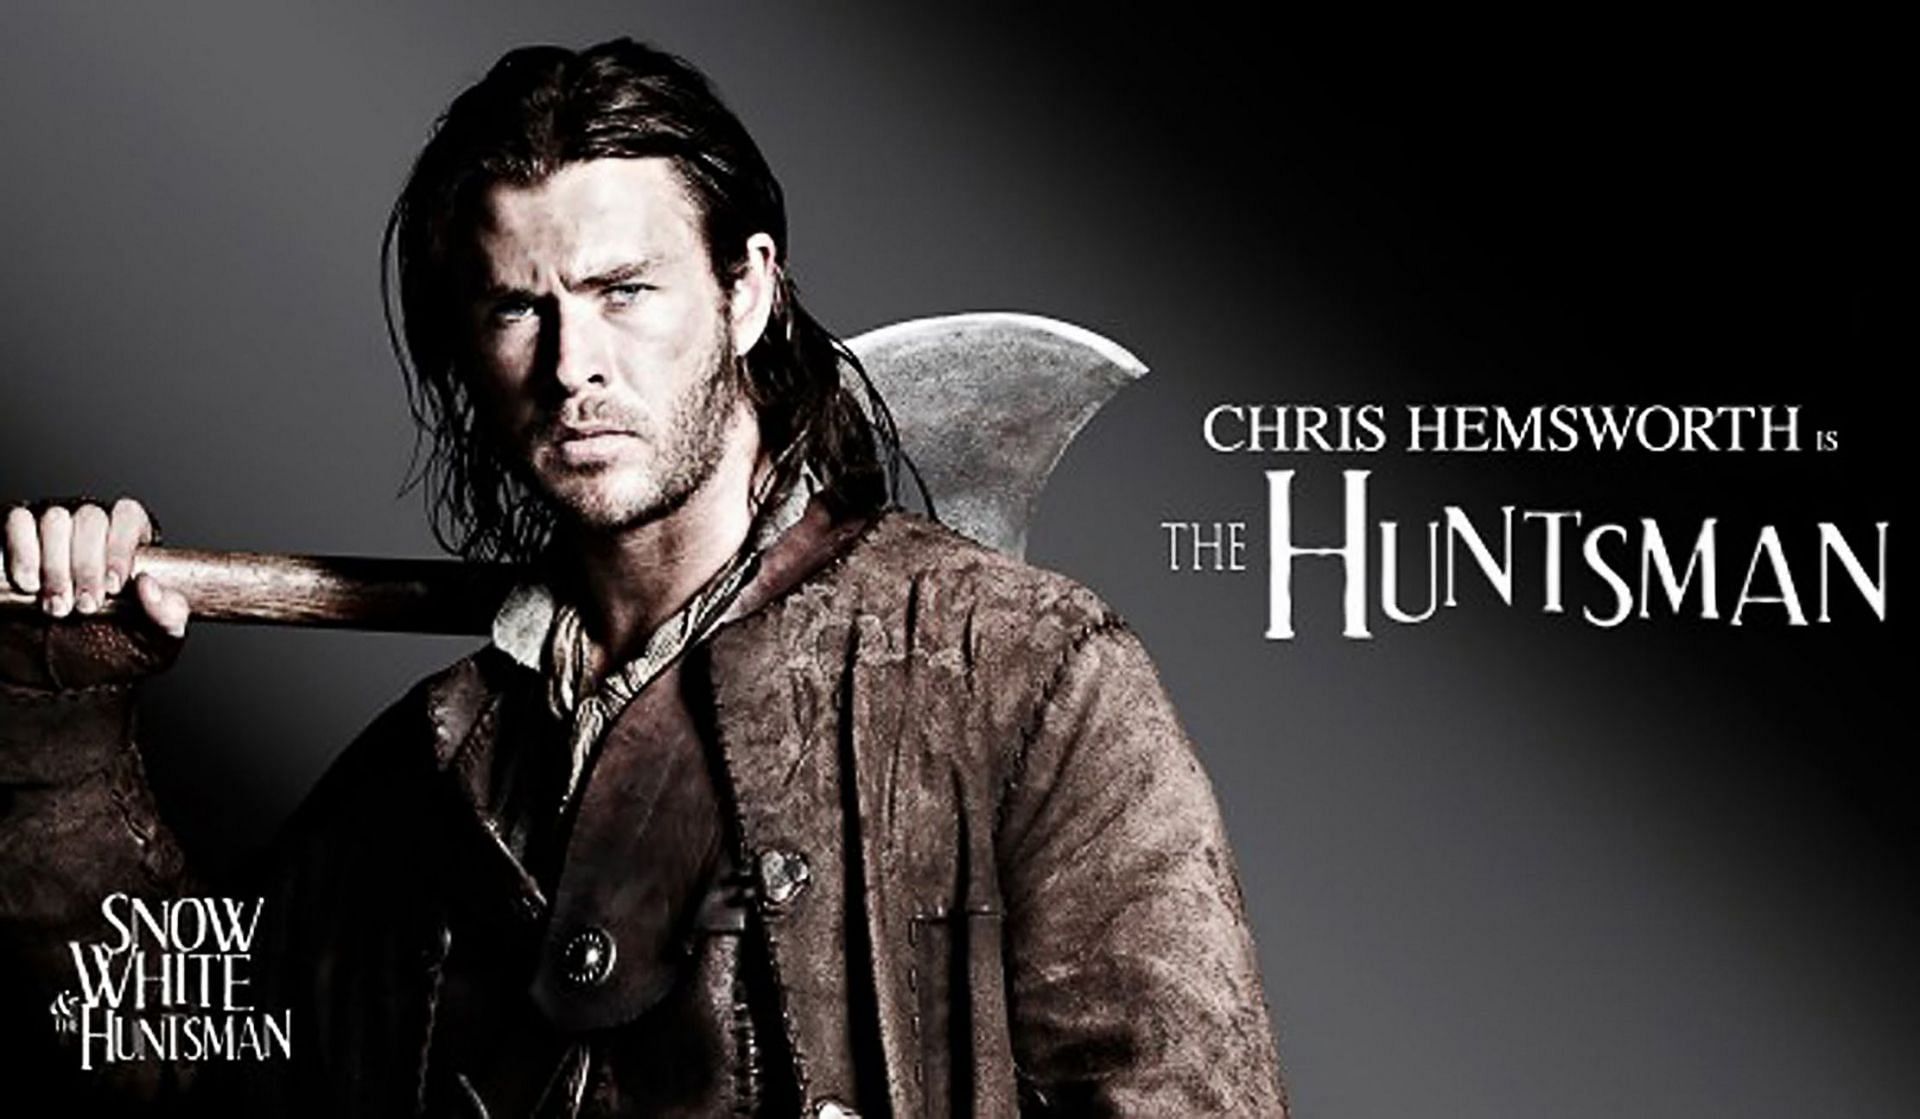 Chris Hemsworth as Eric the Huntsman in The Huntsman film series (Image via Universal Pictures)